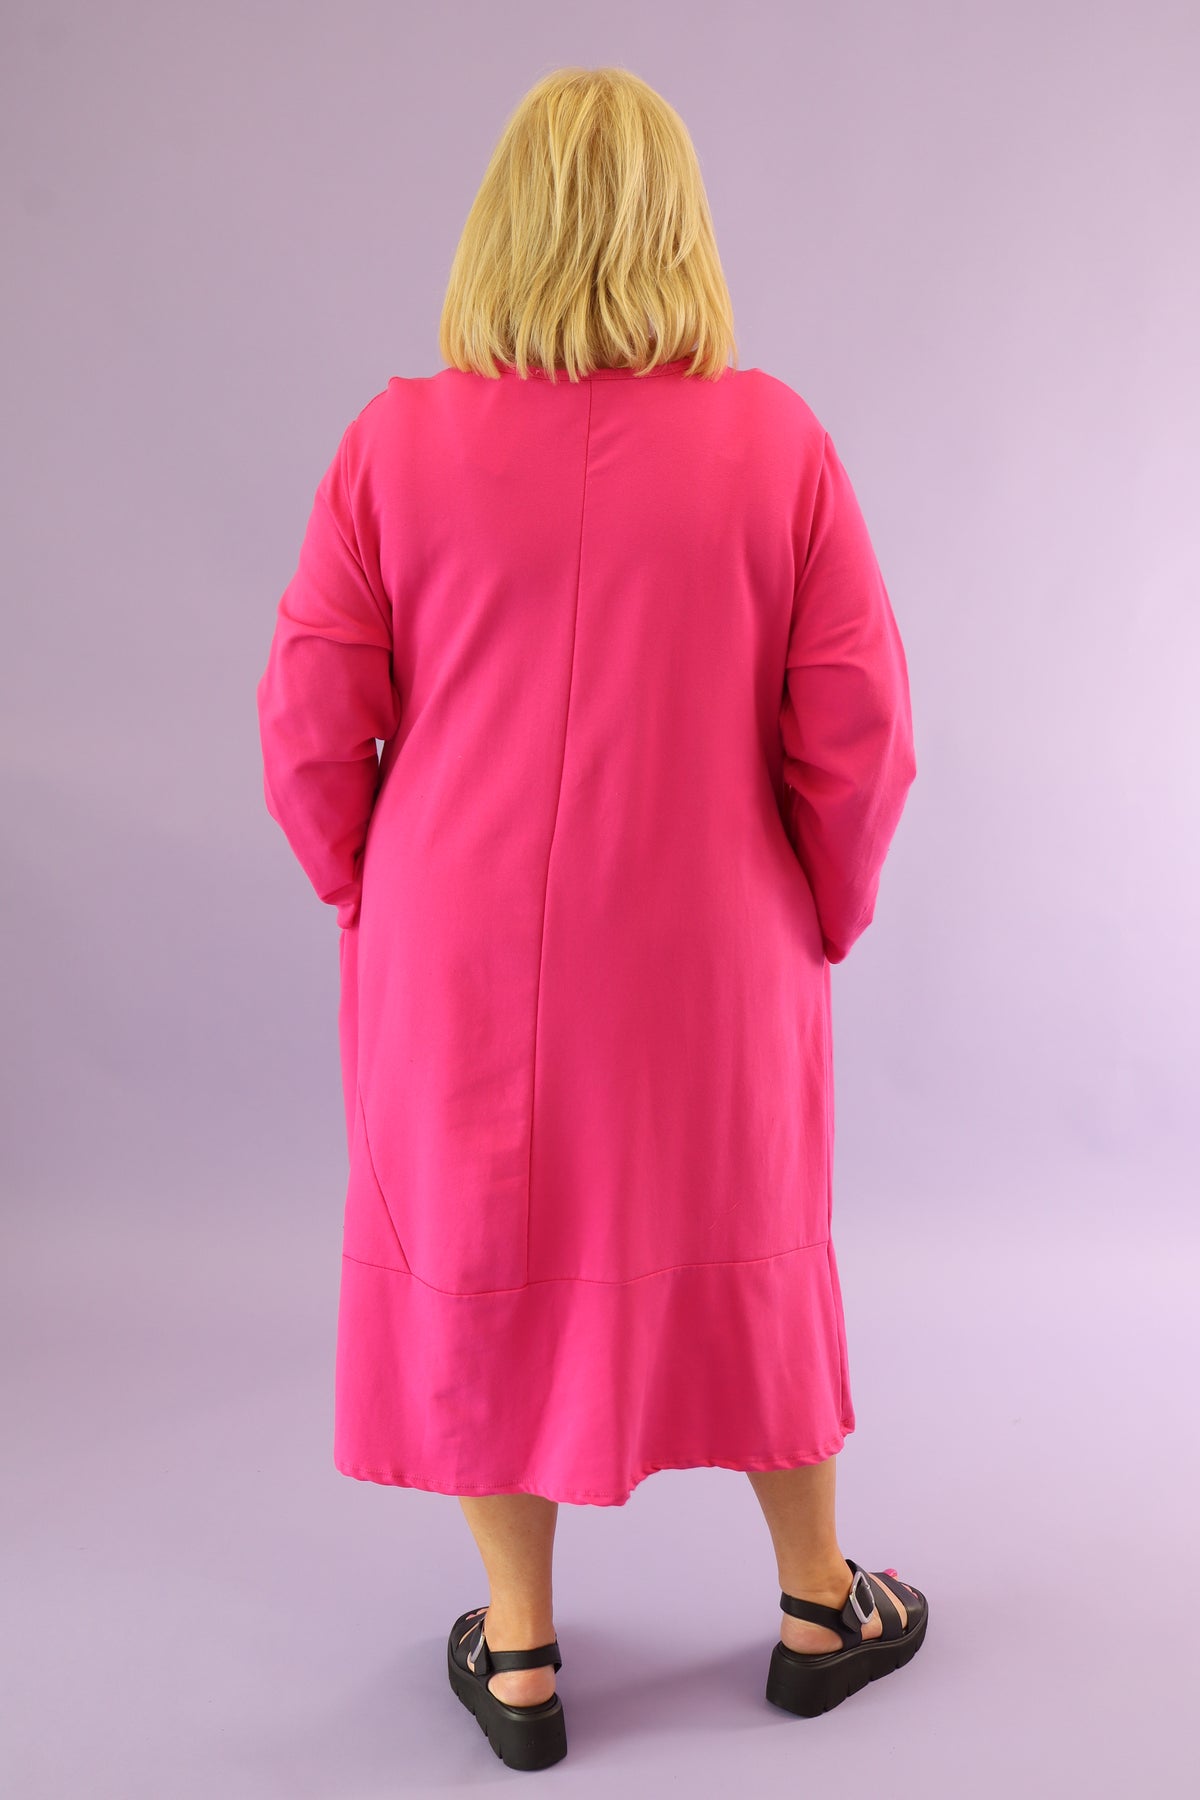 Rue Cotton Dress in Pink